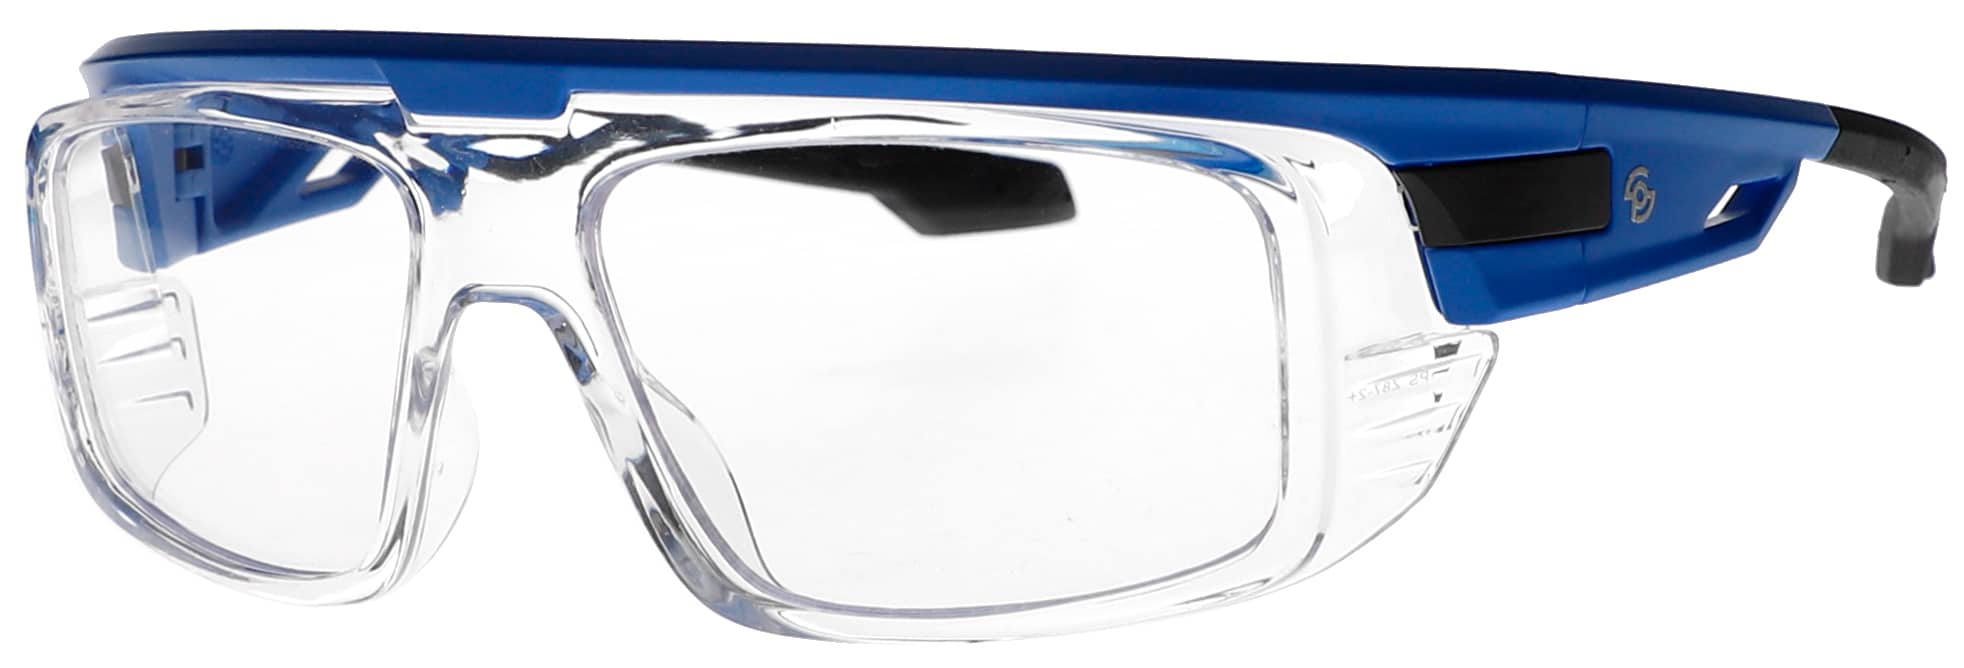 Unisex Soccer Football Protective Goggles Basketball Eyewear Safety Glasses  - Walmart.com